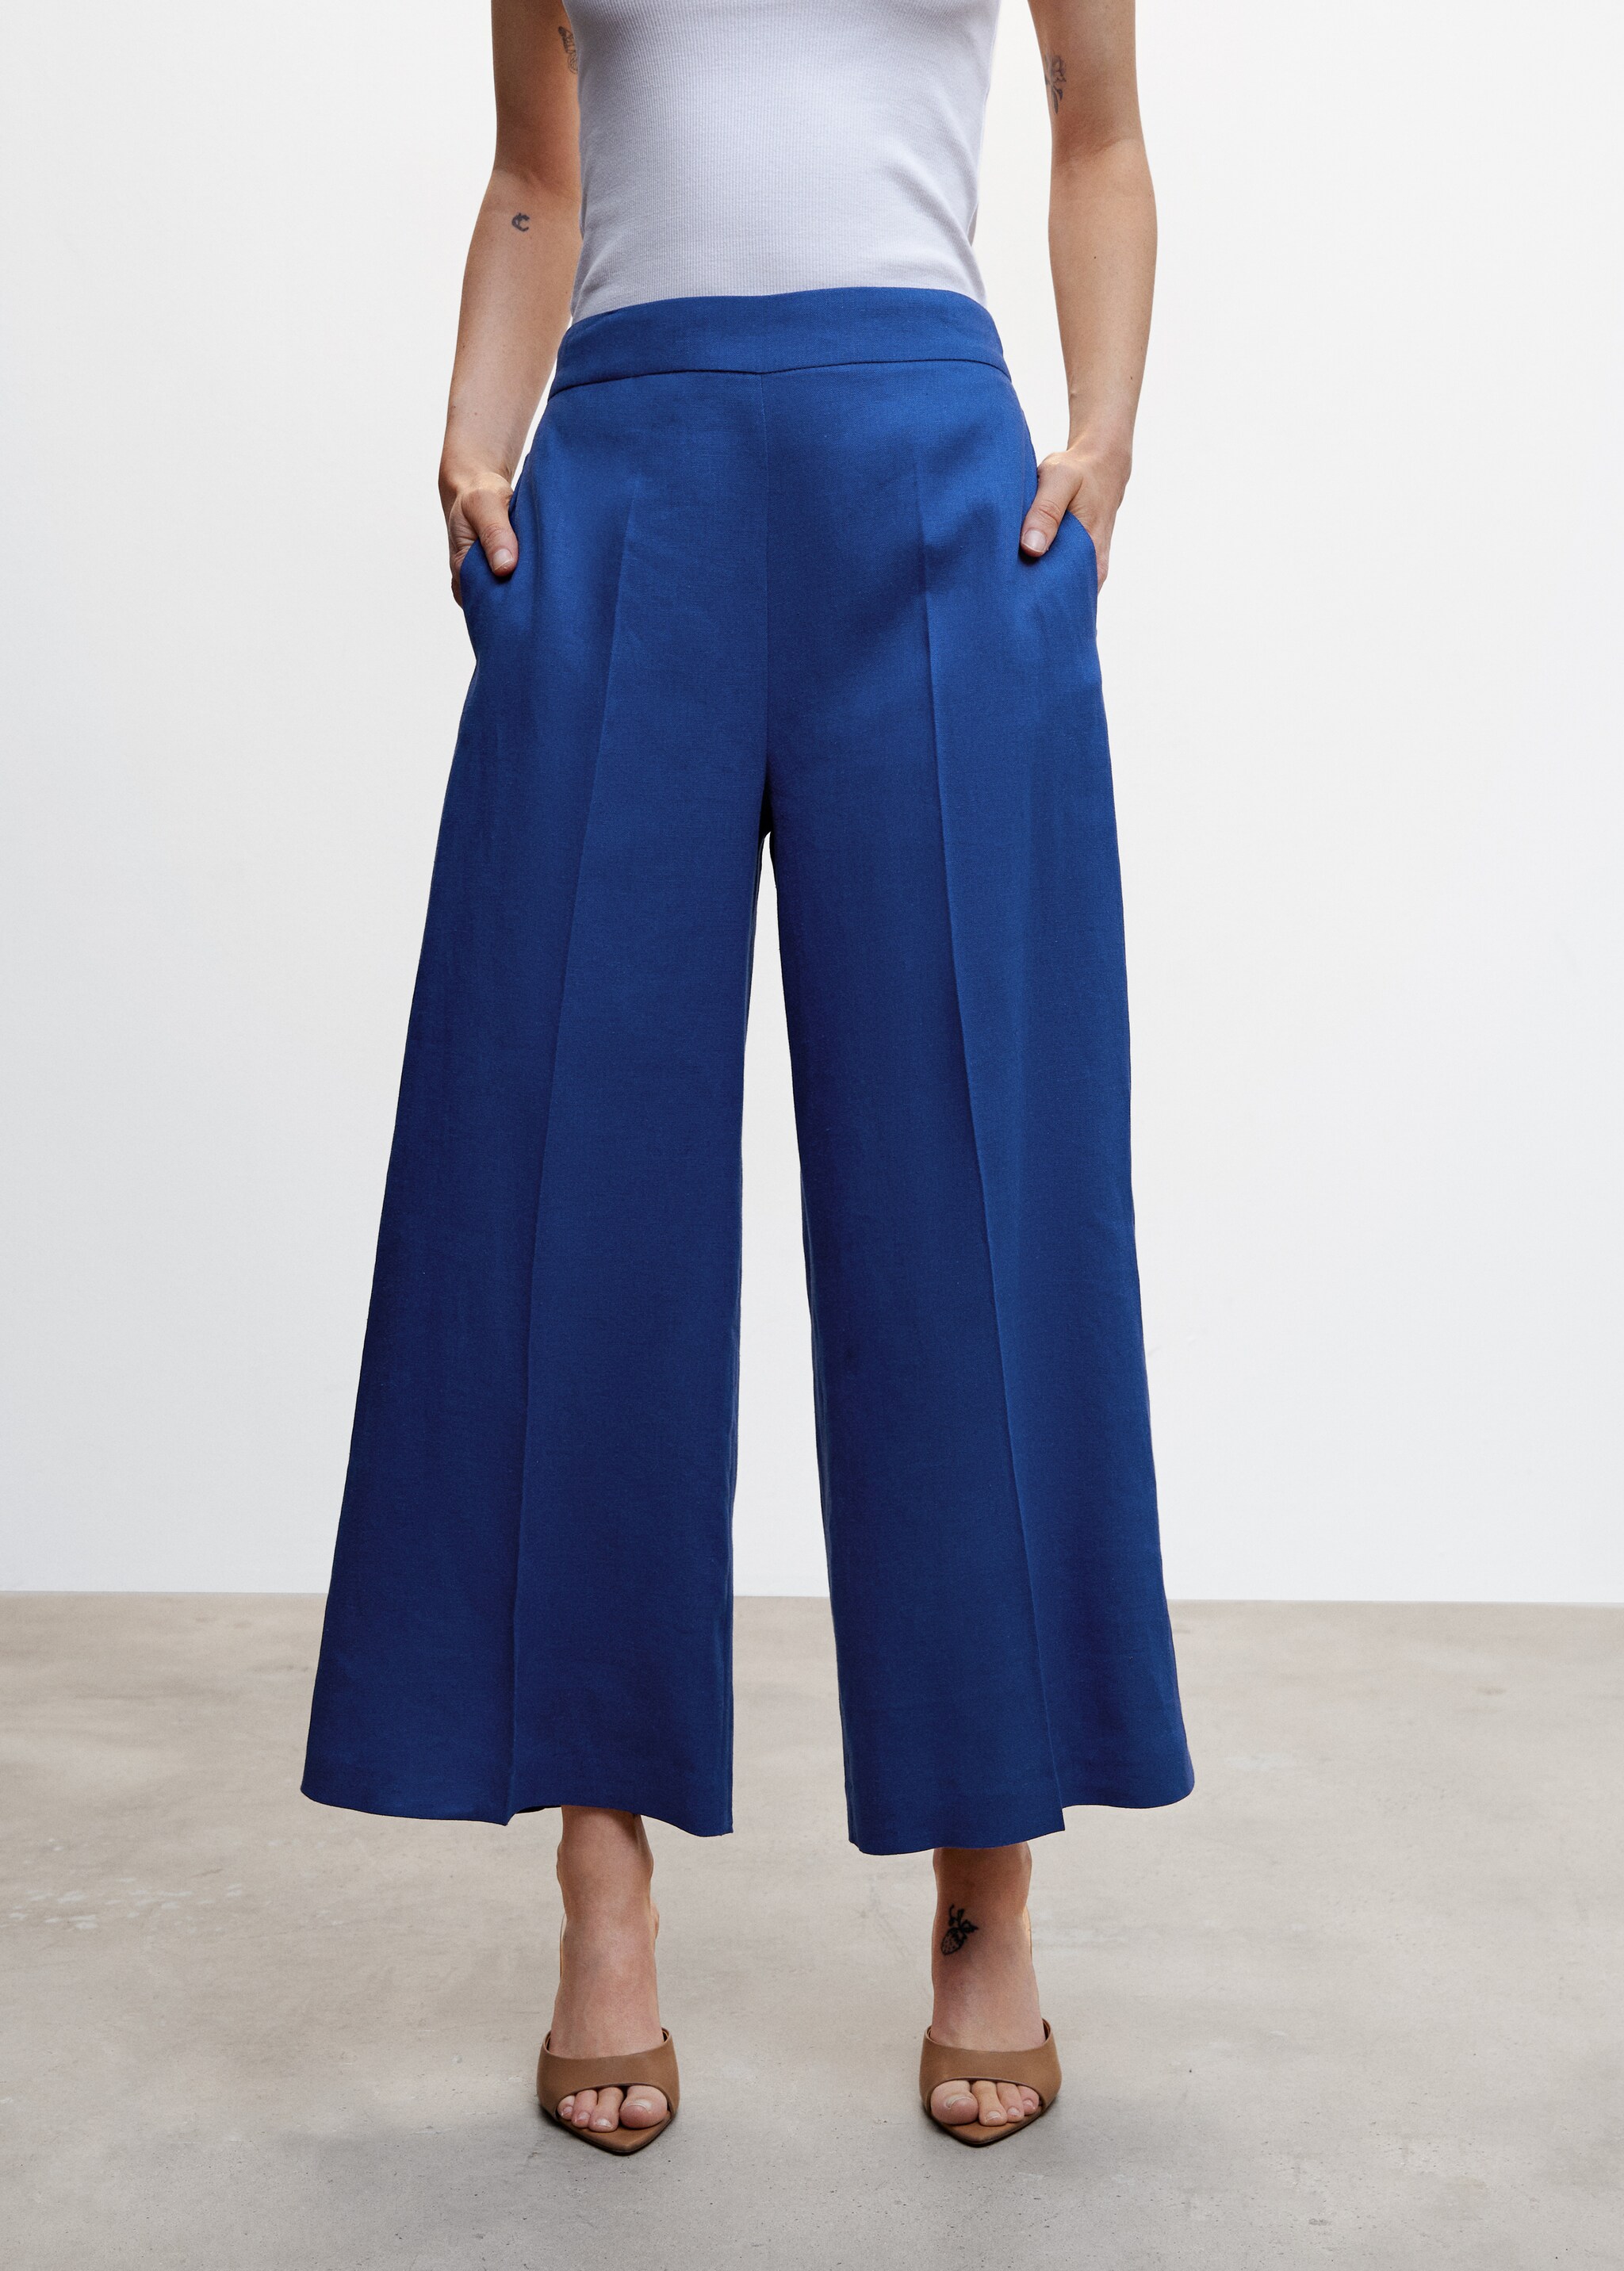 100% linen culotte pants  - Medium plane